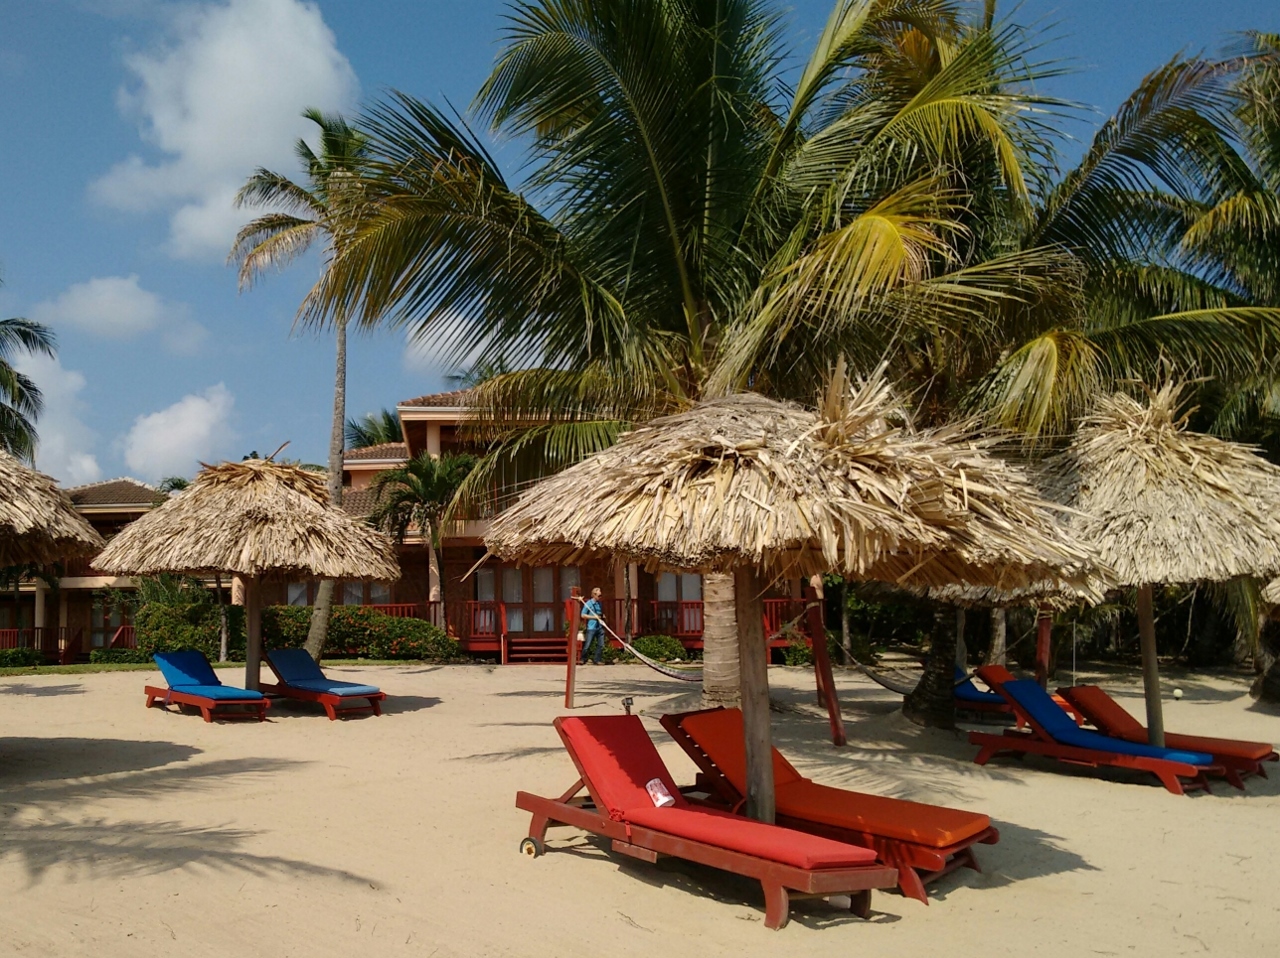 Belizean Dreams Resort, Hopkins Beach, Belize